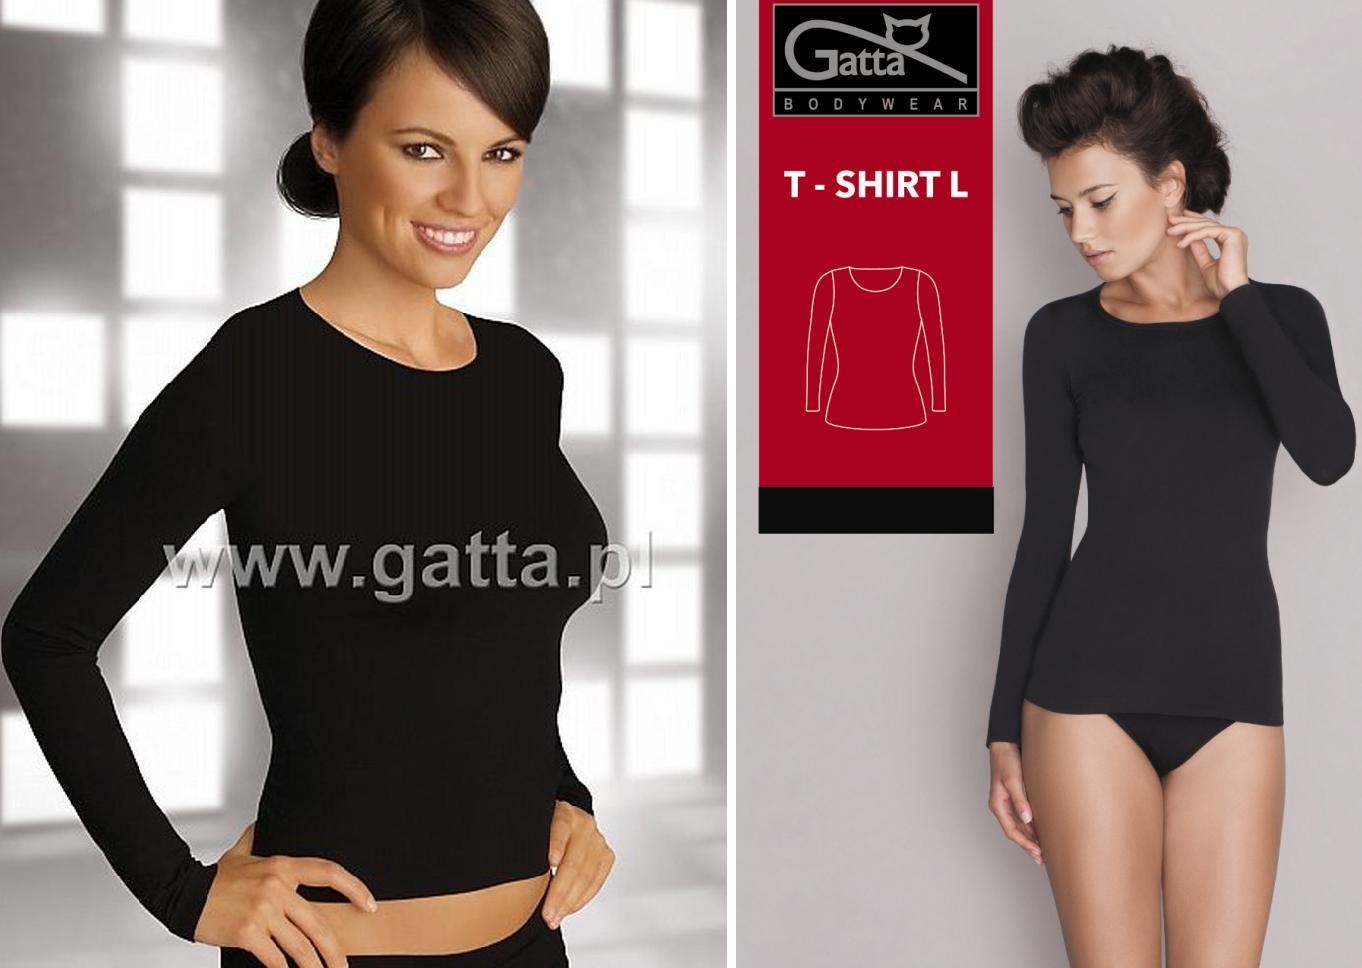 Koszulka Gatta T-shirt L 2635